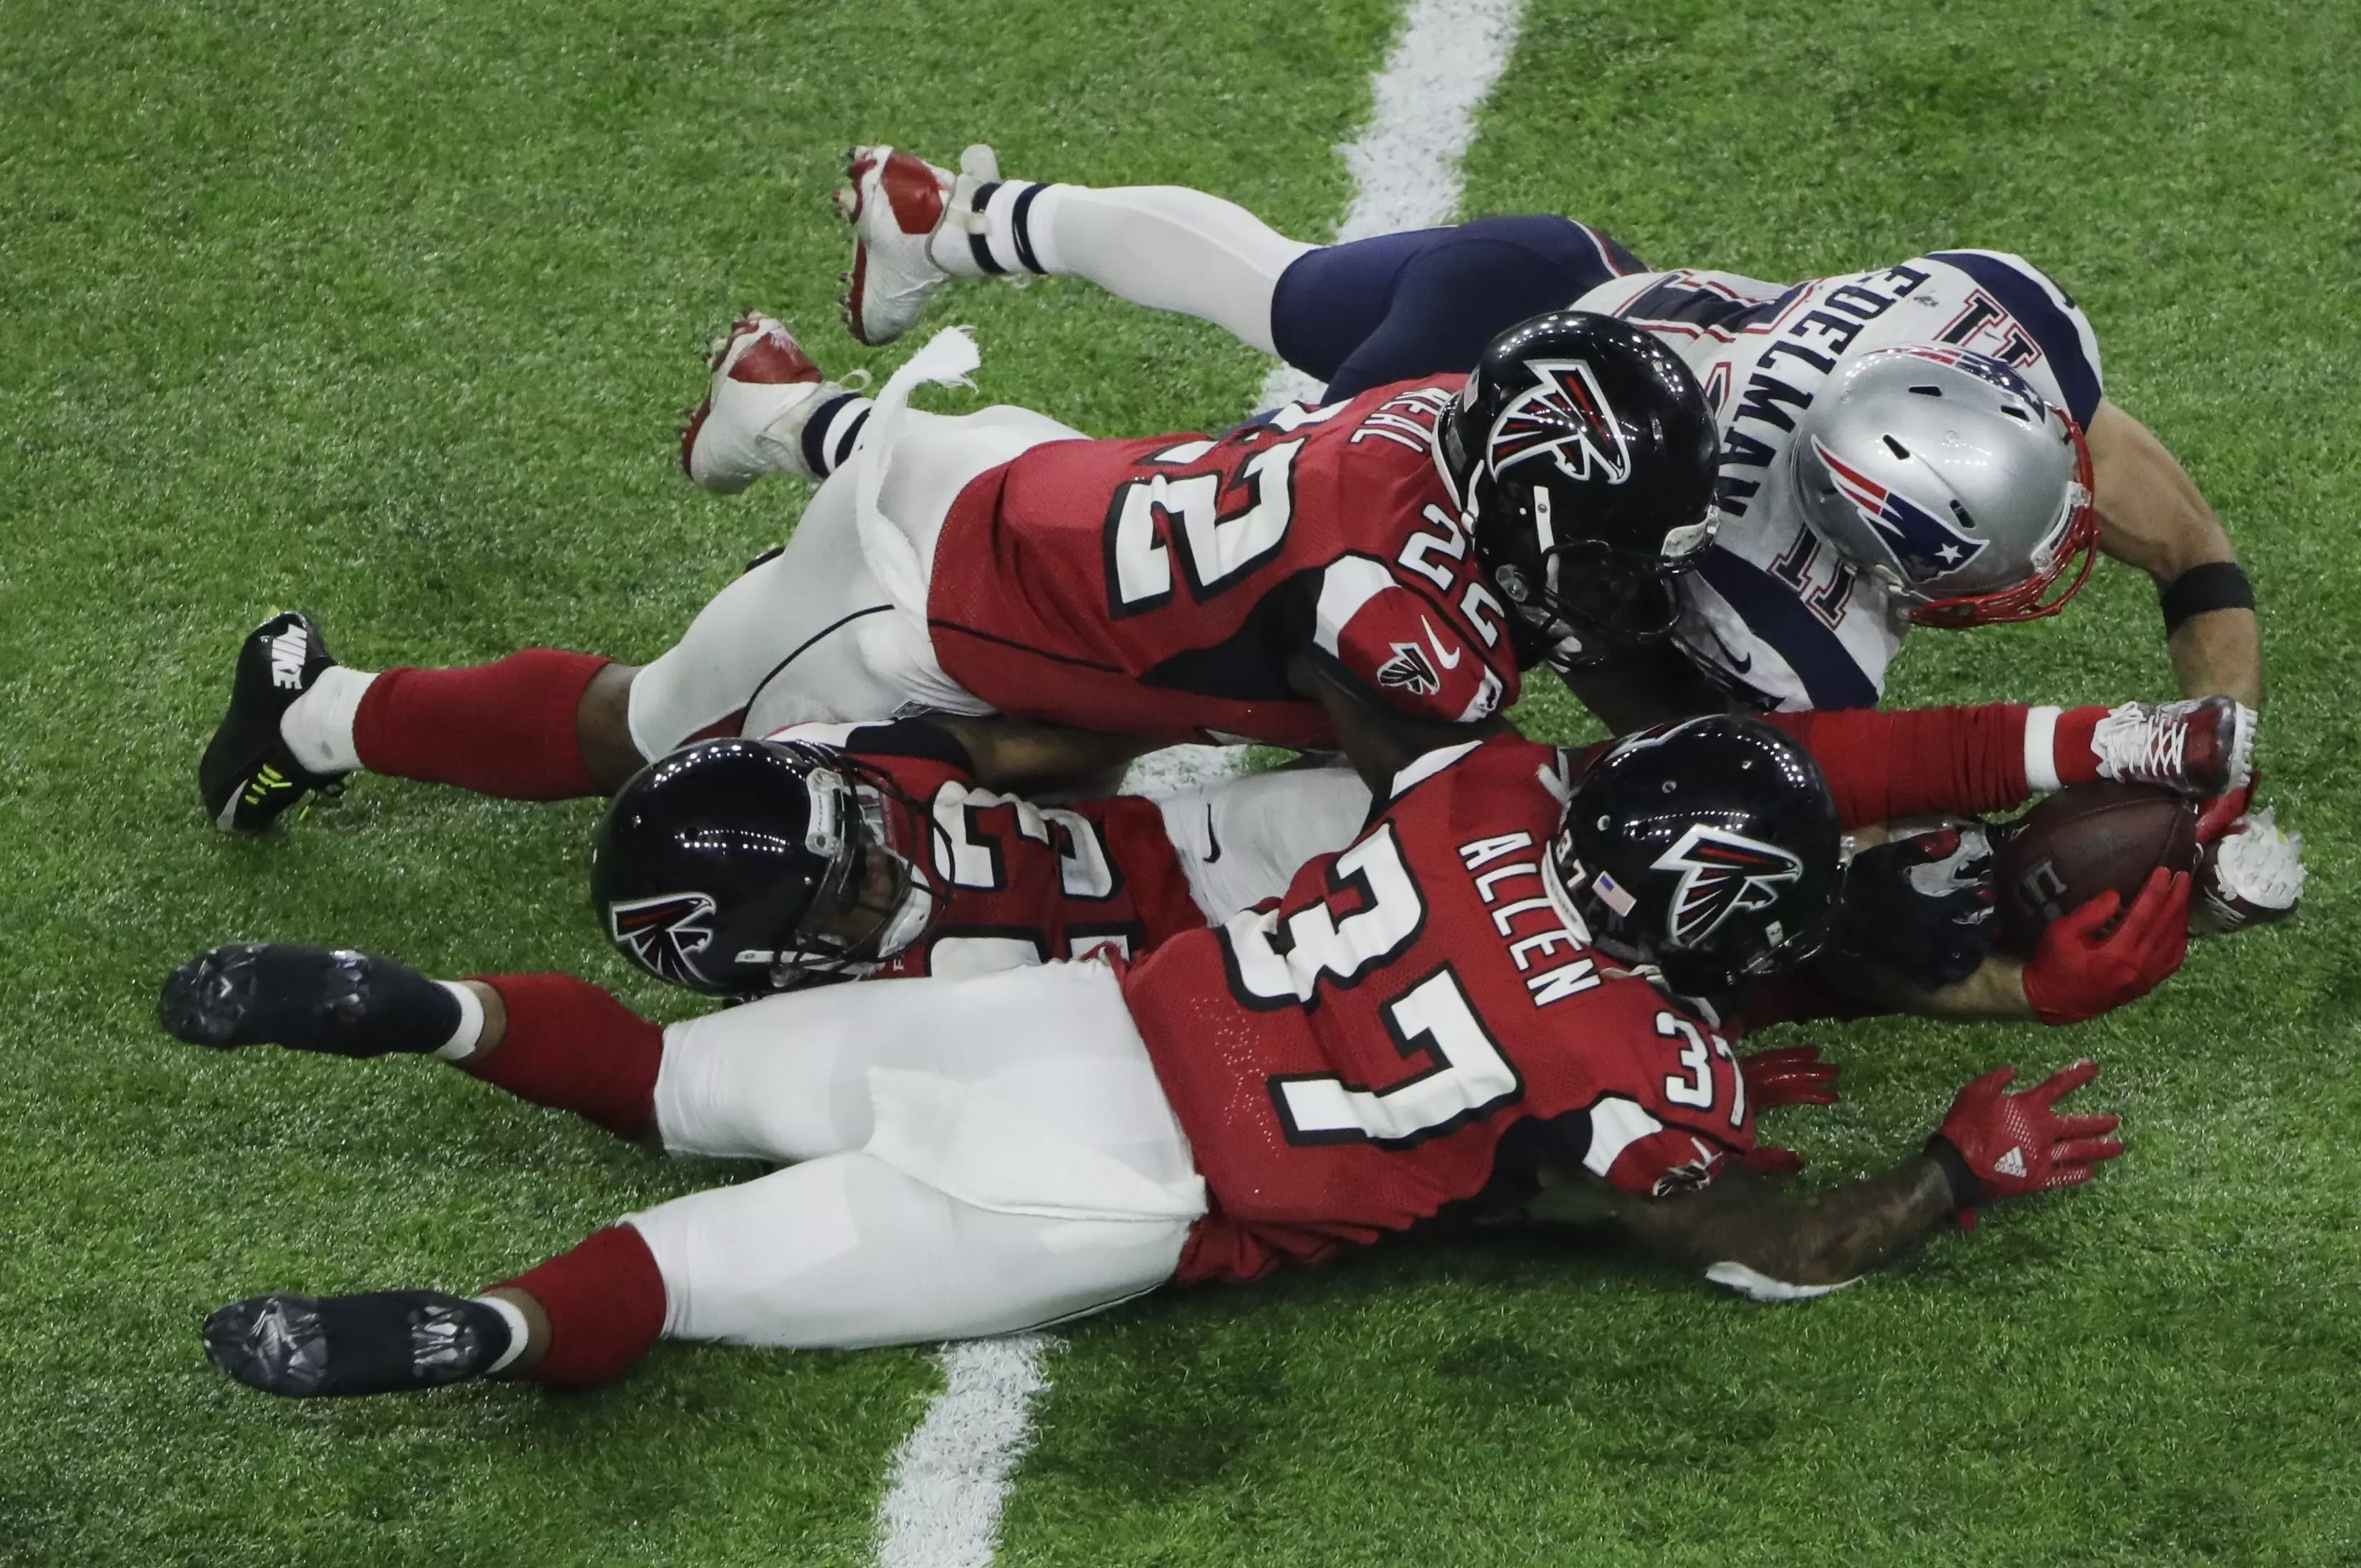 WATCH: The Heroic Julian Edelman Catch That Helped Make Super Bowl History